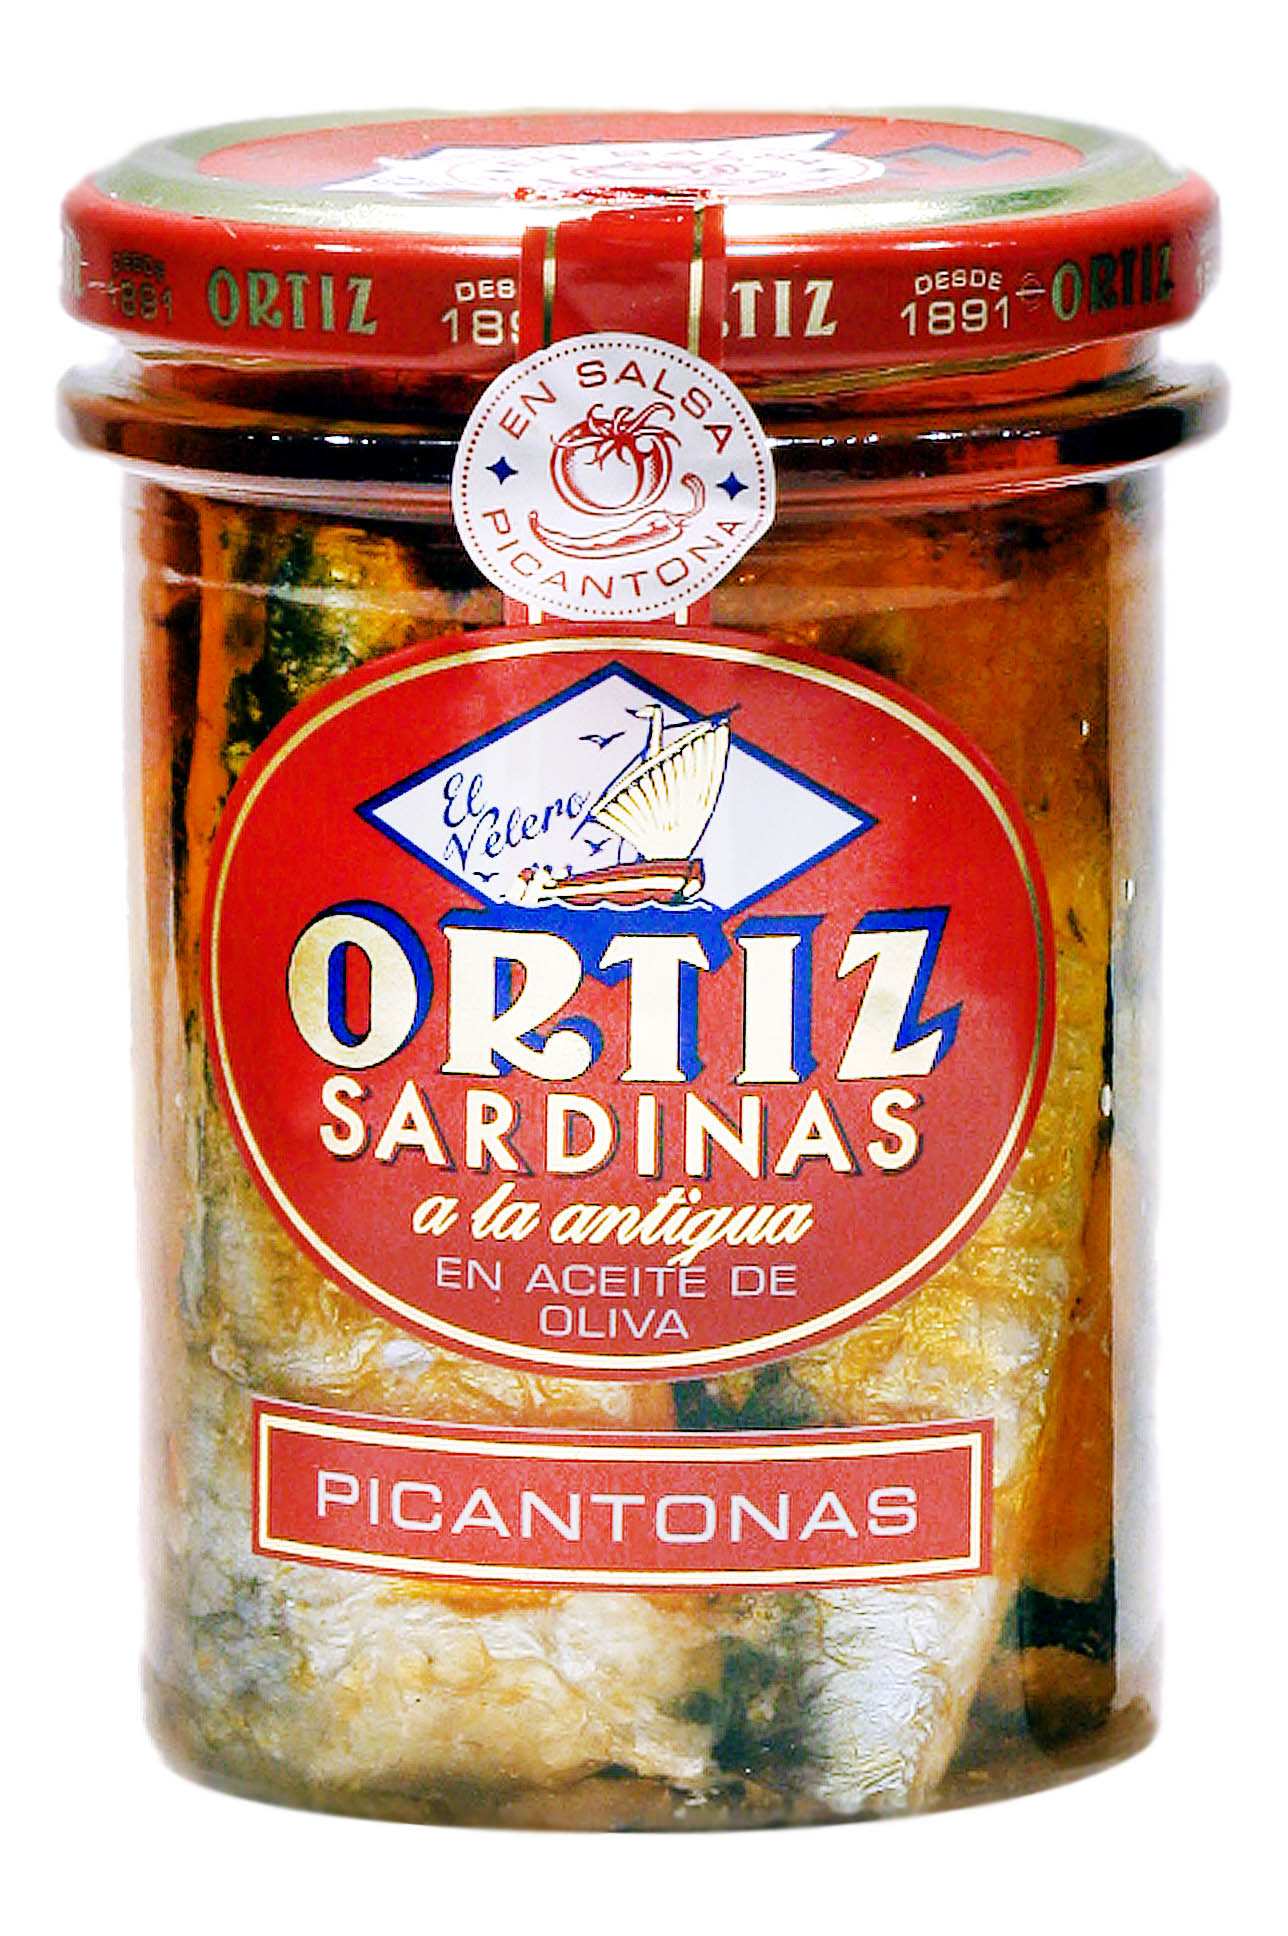 Spicy sardines